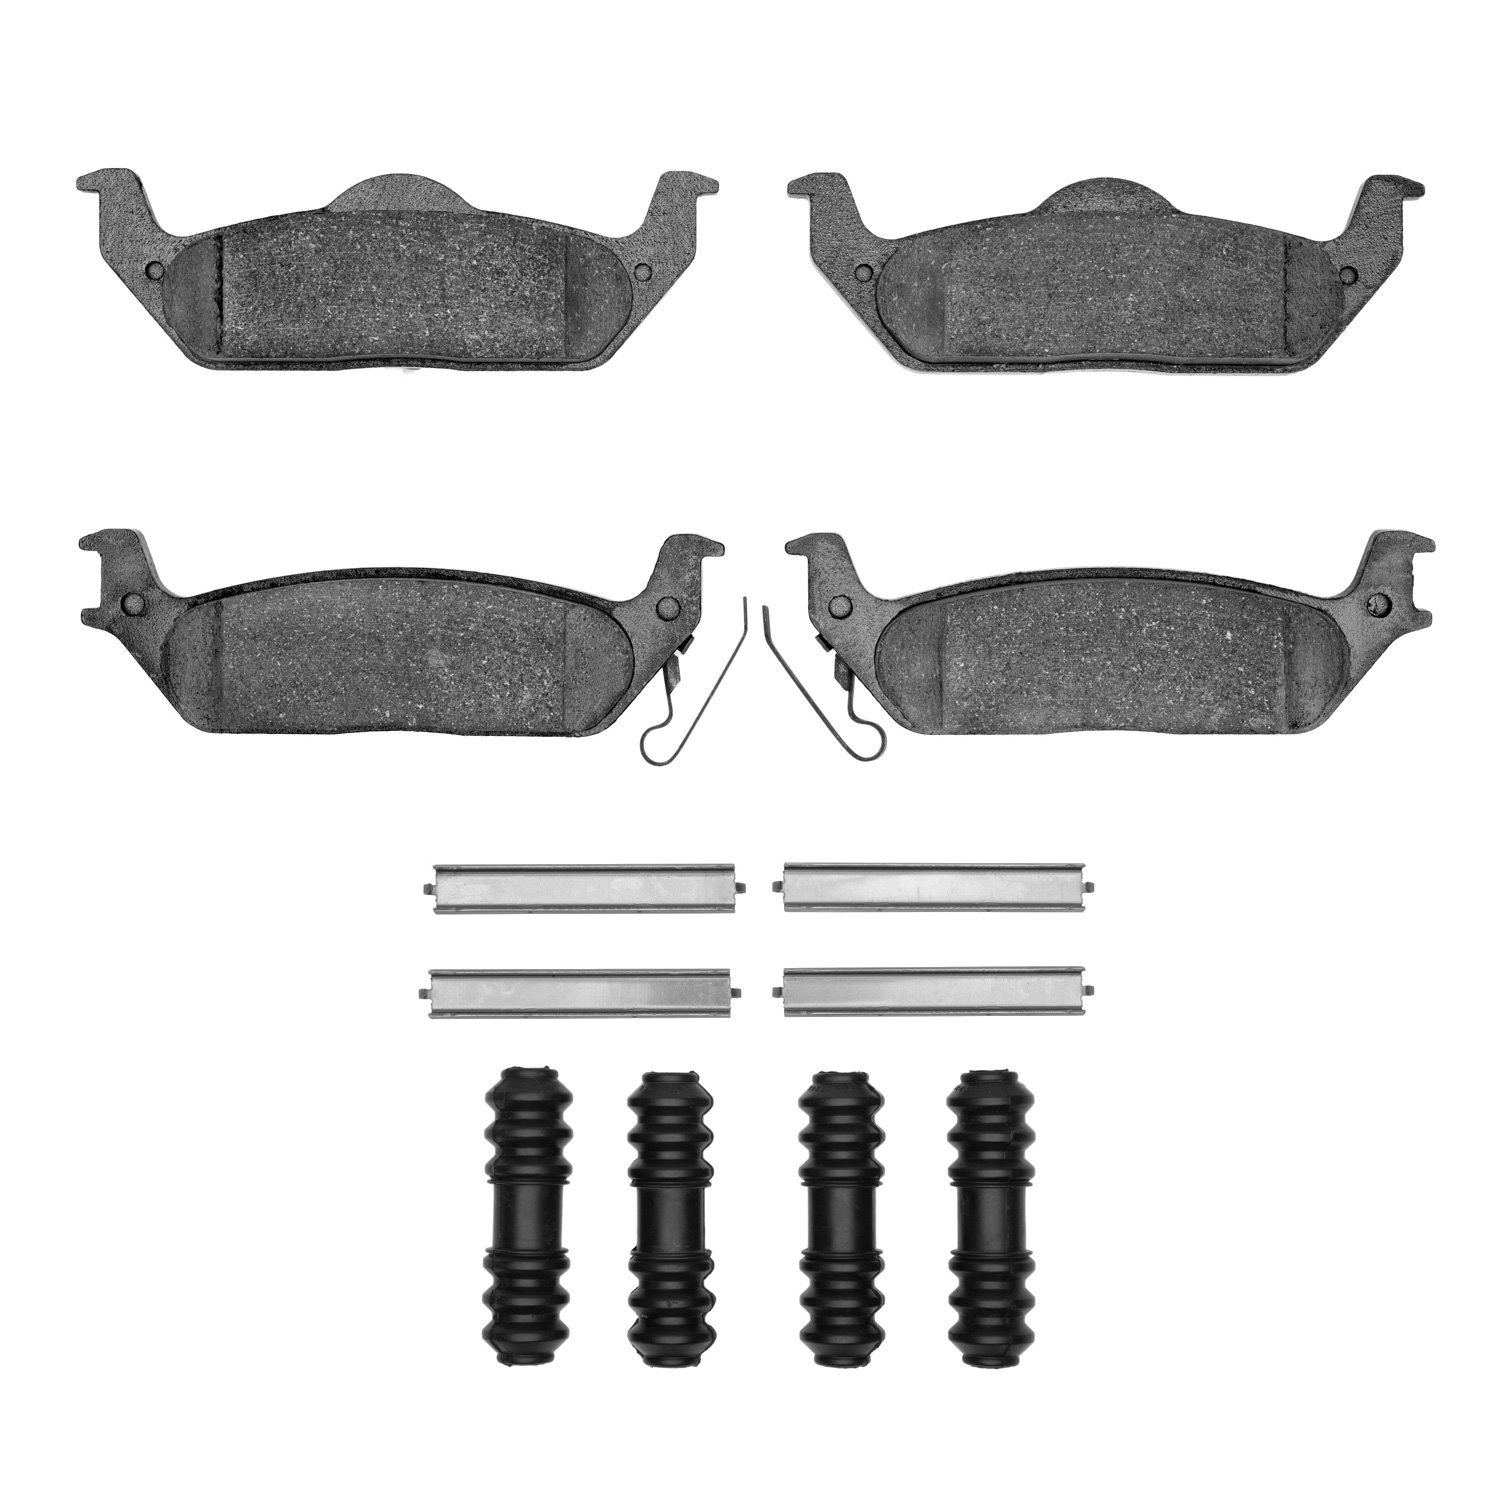 1310-1012-01 3000-Series Ceramic Brake Pads & Hardware Kit, 2004-2011 Ford/Lincoln/Mercury/Mazda, Position: Rear